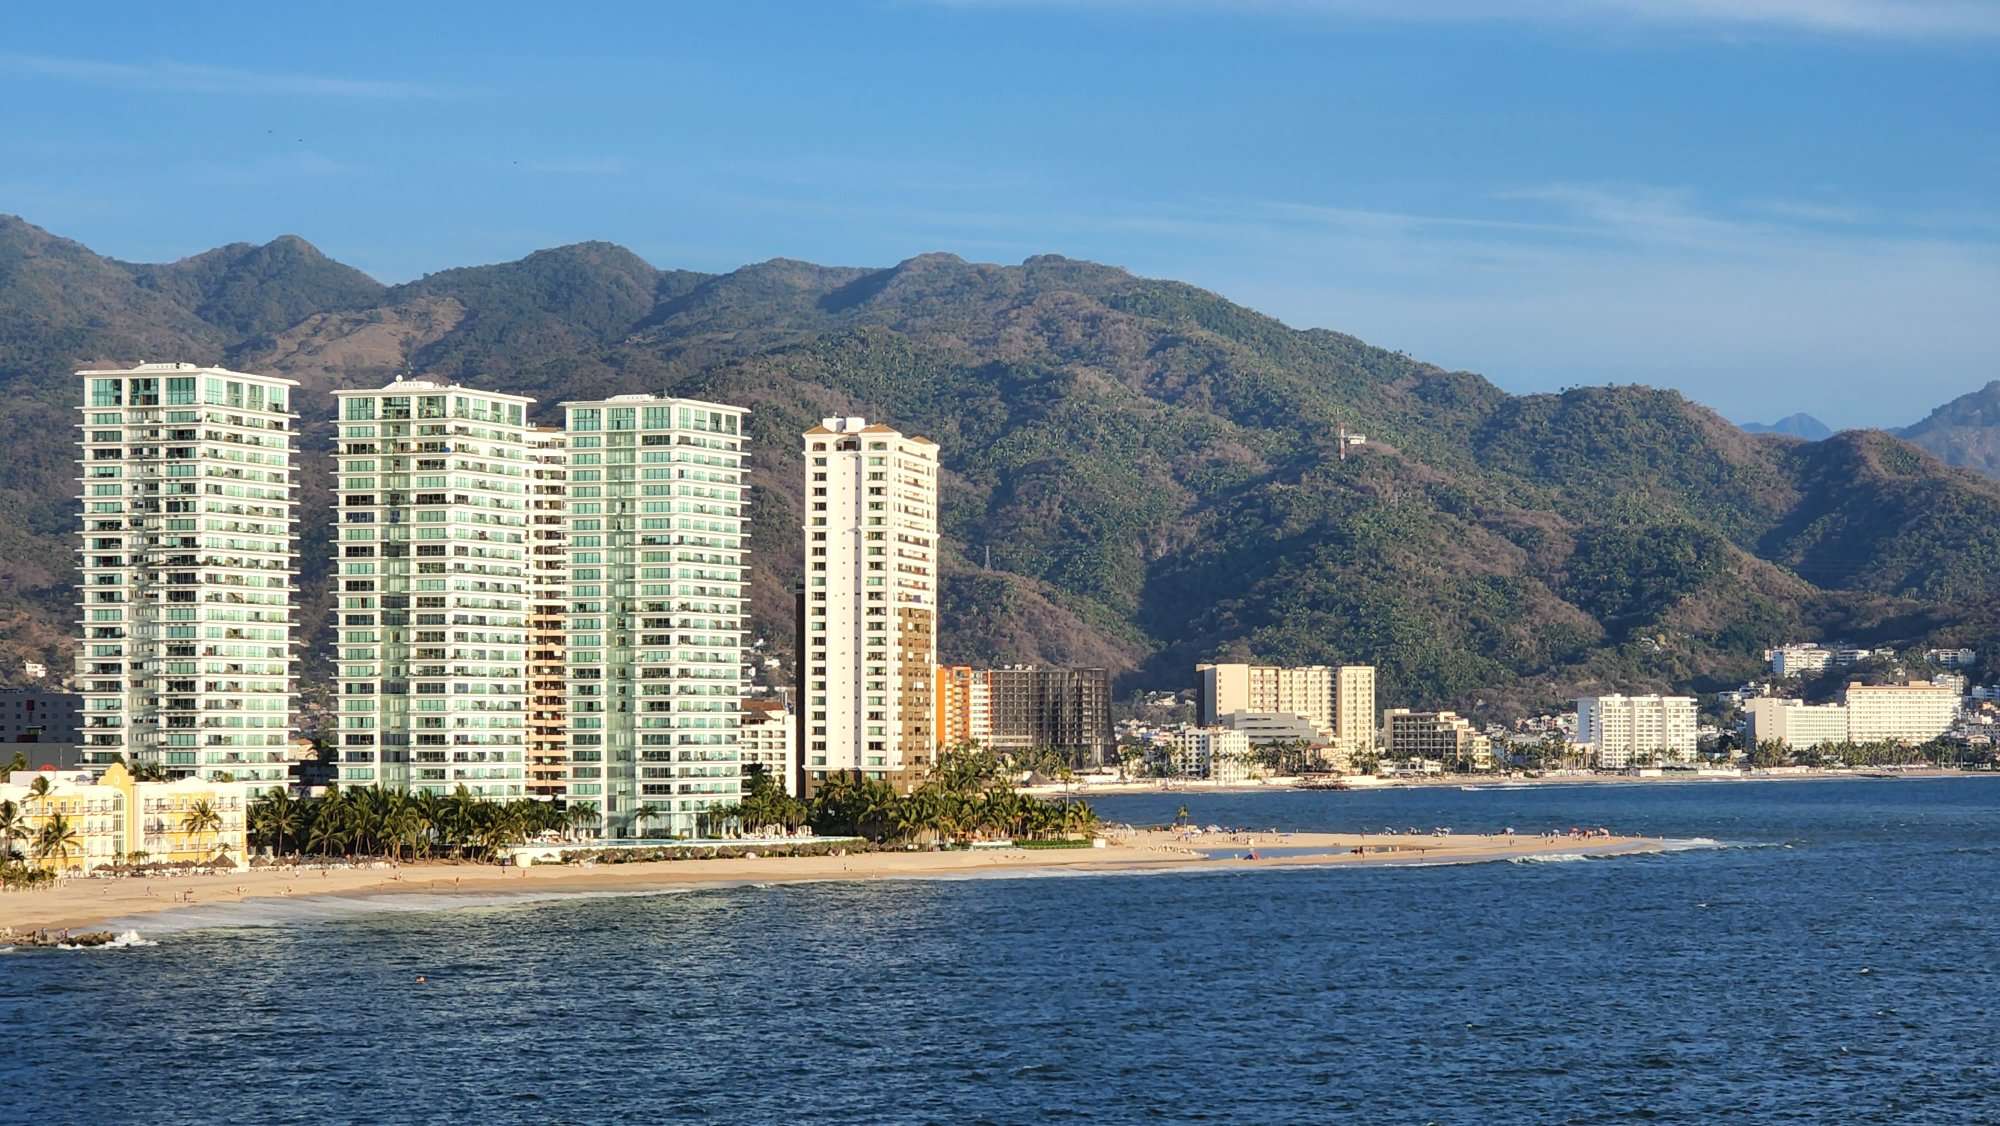 apartment buildings along the coastline of Puerto Vallarta